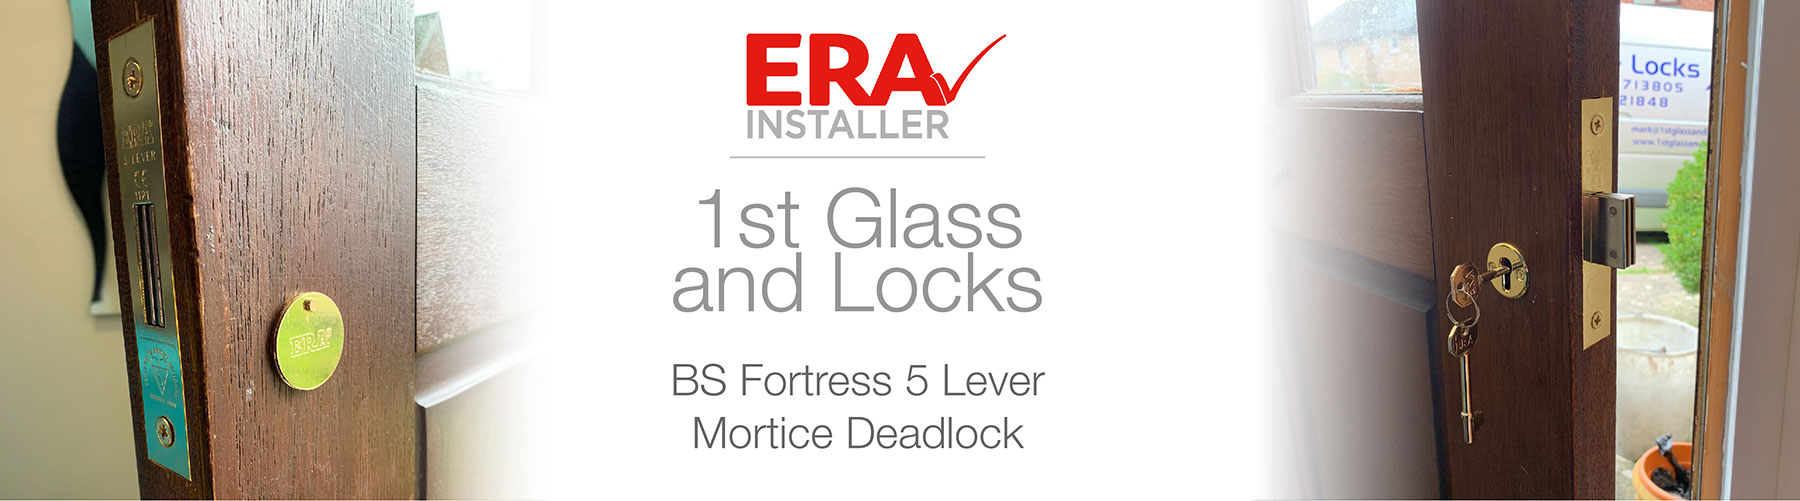 ERA Installer Testimonial 1st glass and locks